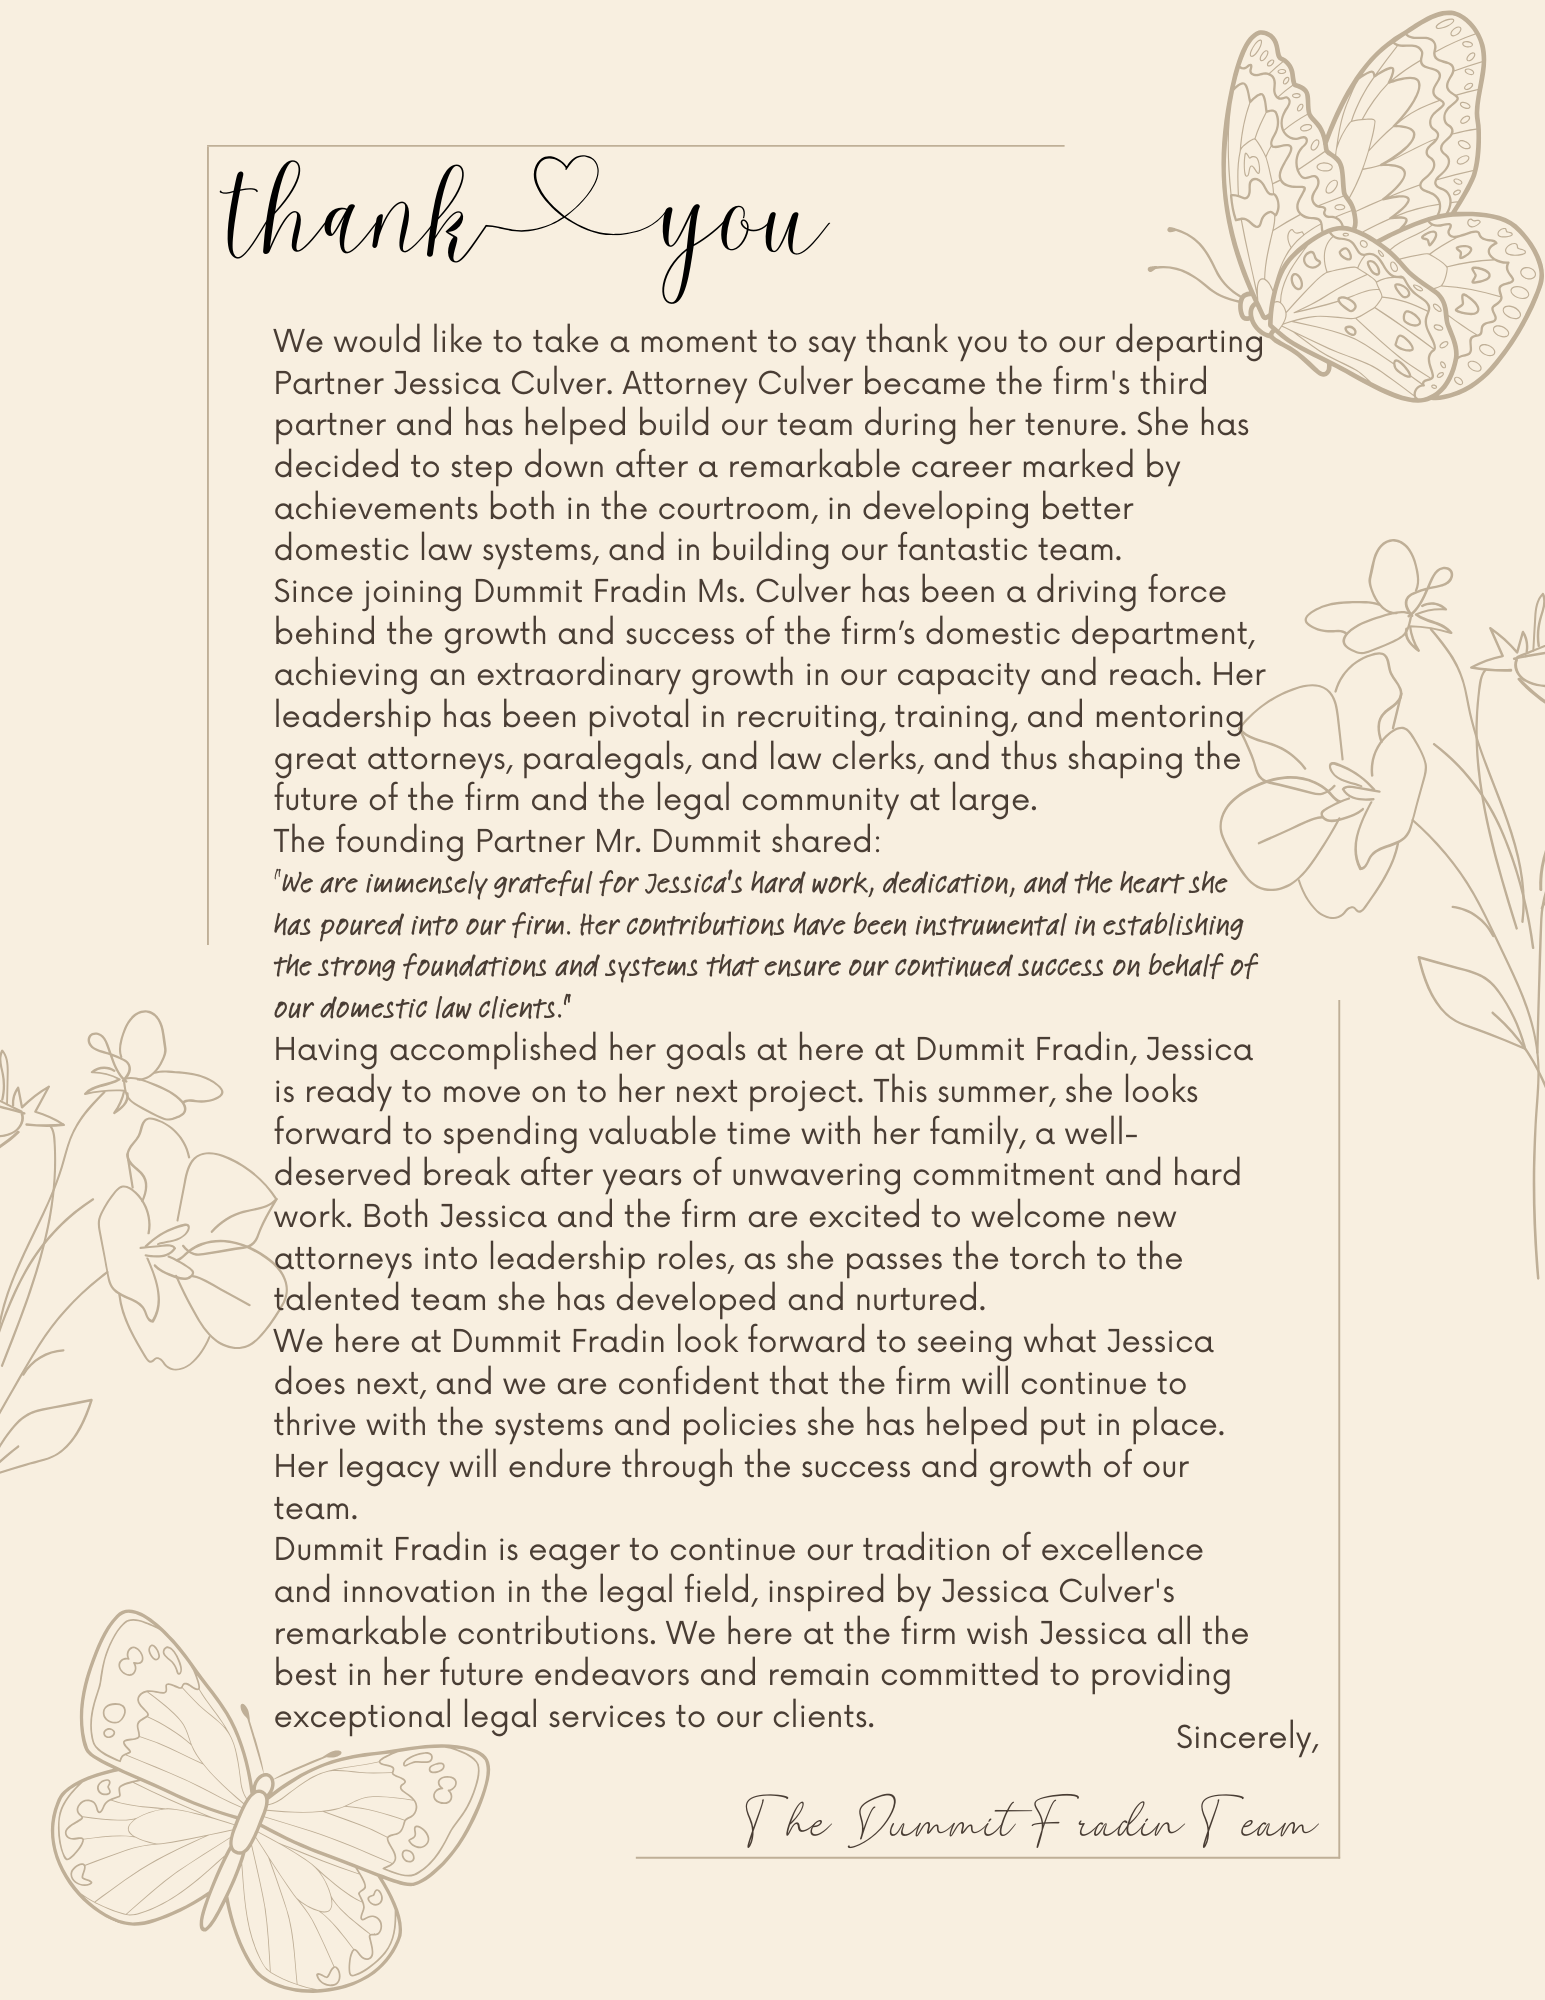 Letter of Gratitude for departing partner Jessica Culver